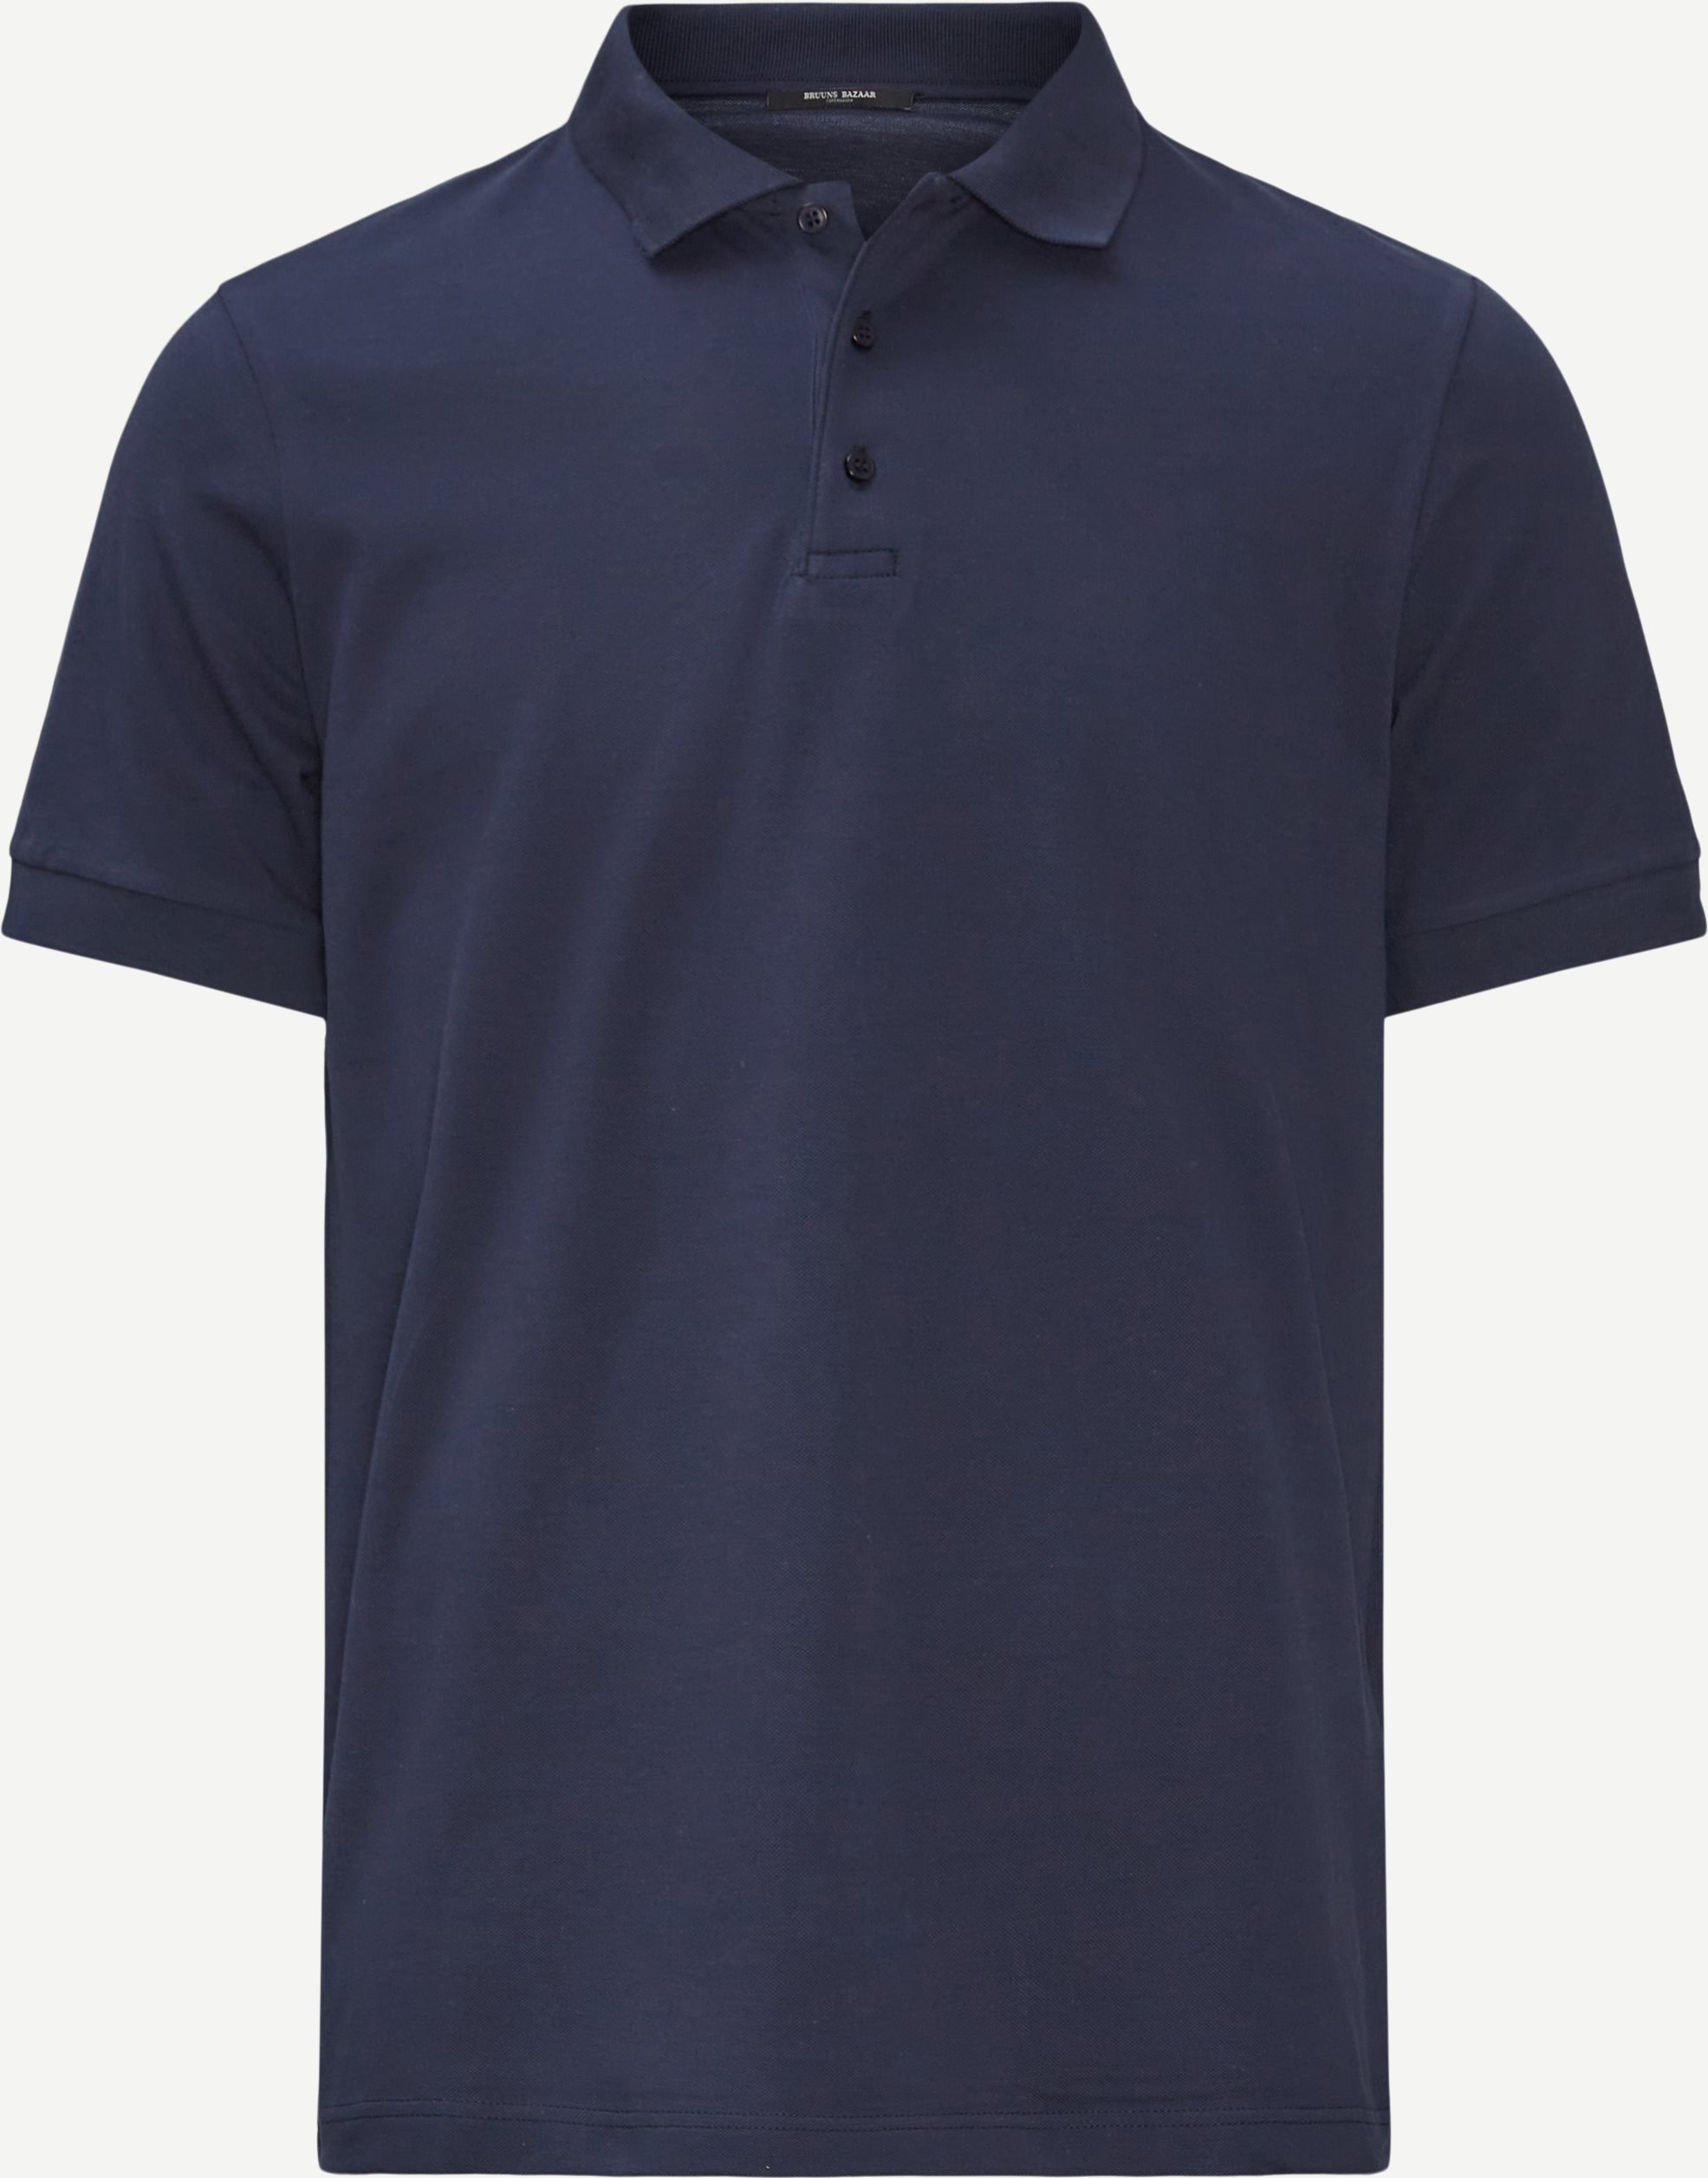 Raul Gonzales Polo - T-shirts - Regular fit - Blå